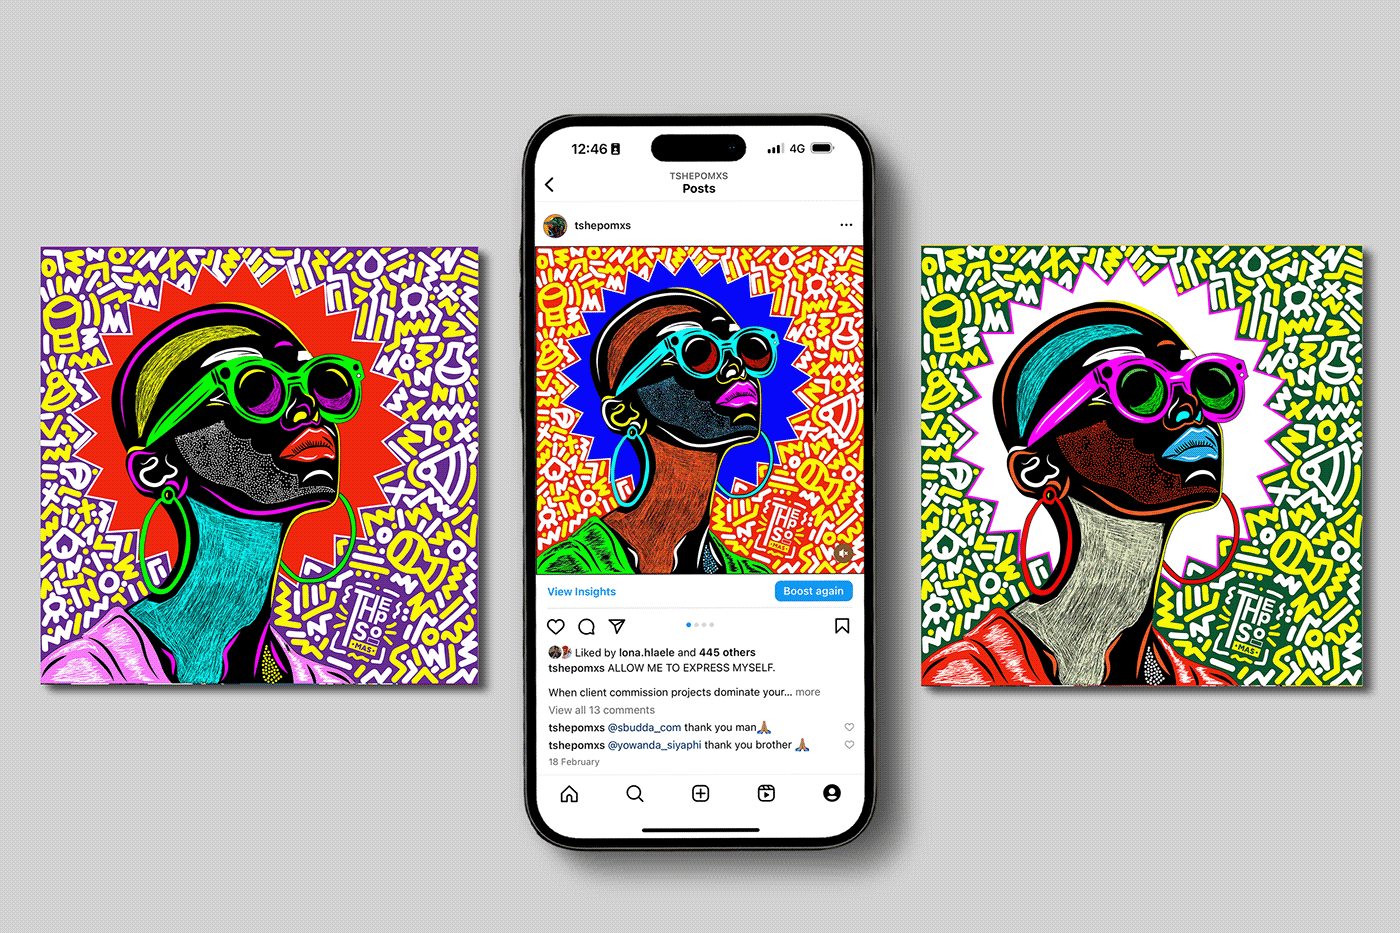 Vibrant afro digital art of african 
lady, social media post